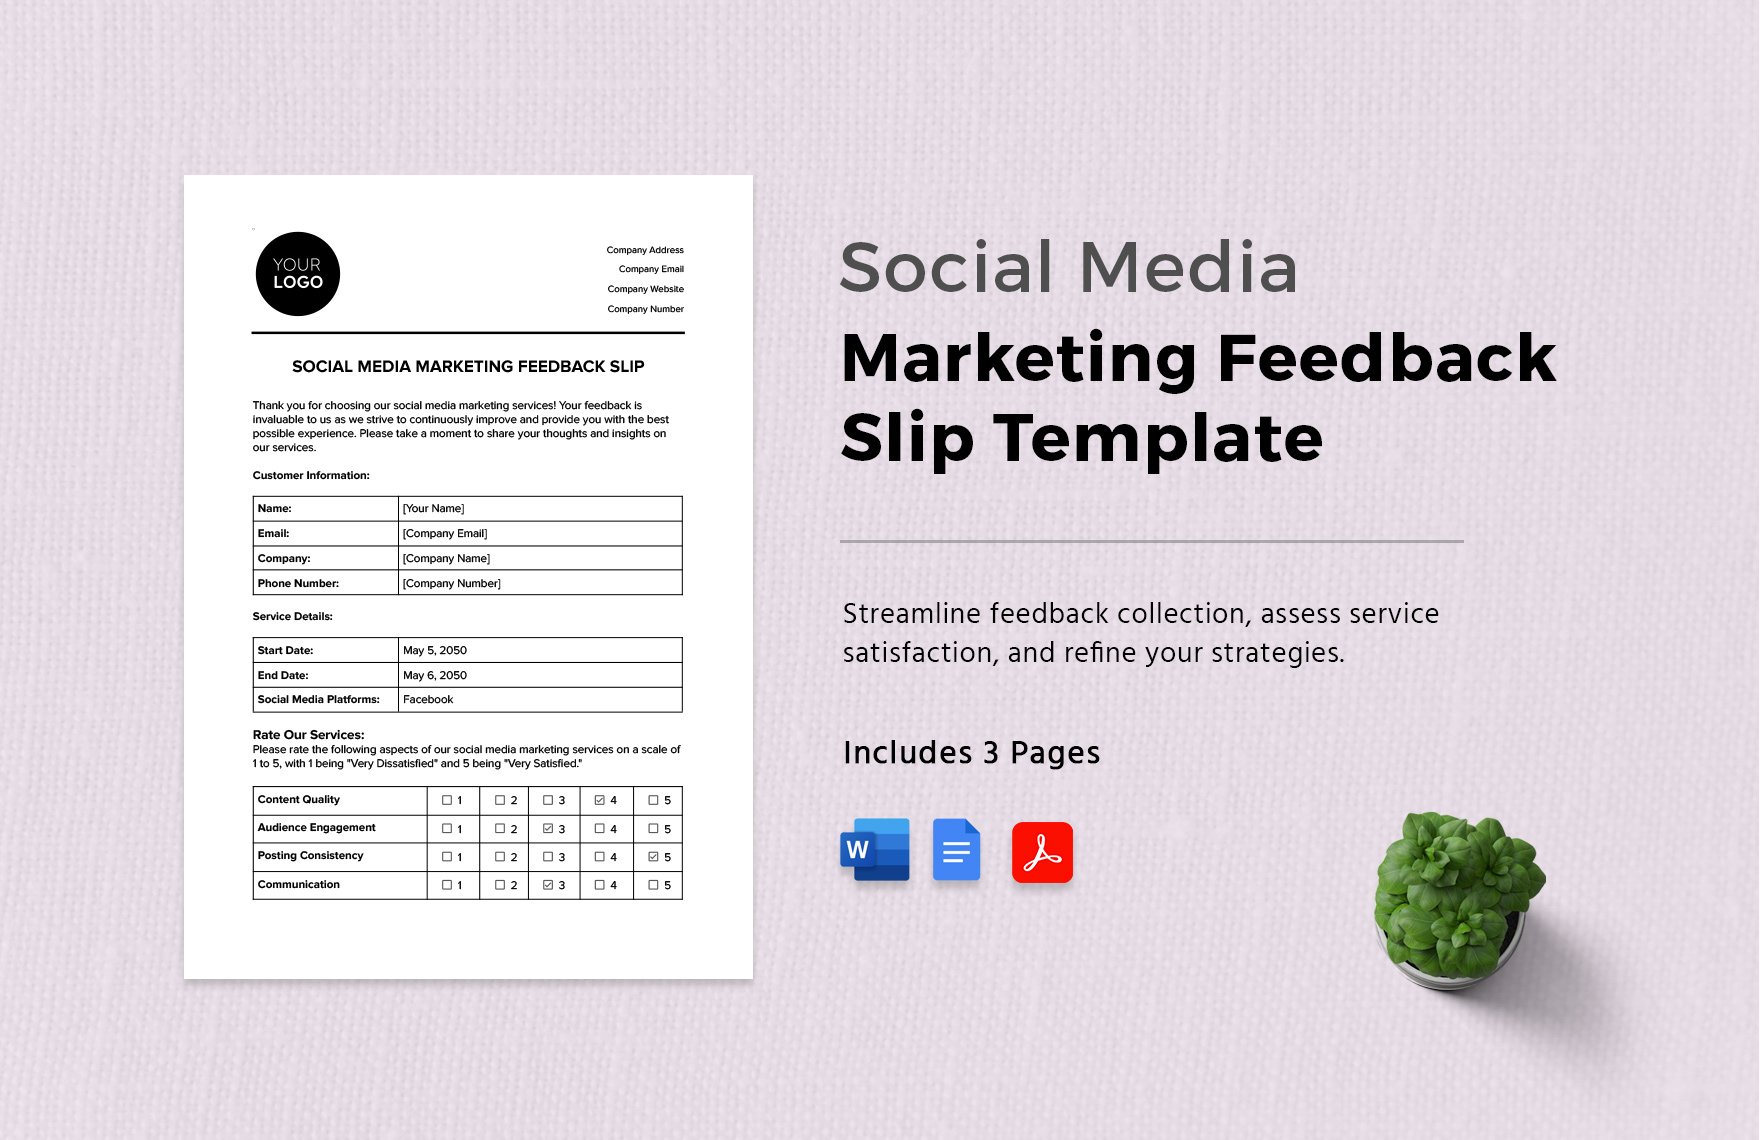 Social Media Marketing Feedback Slip Template in Word, Google Docs, PDF